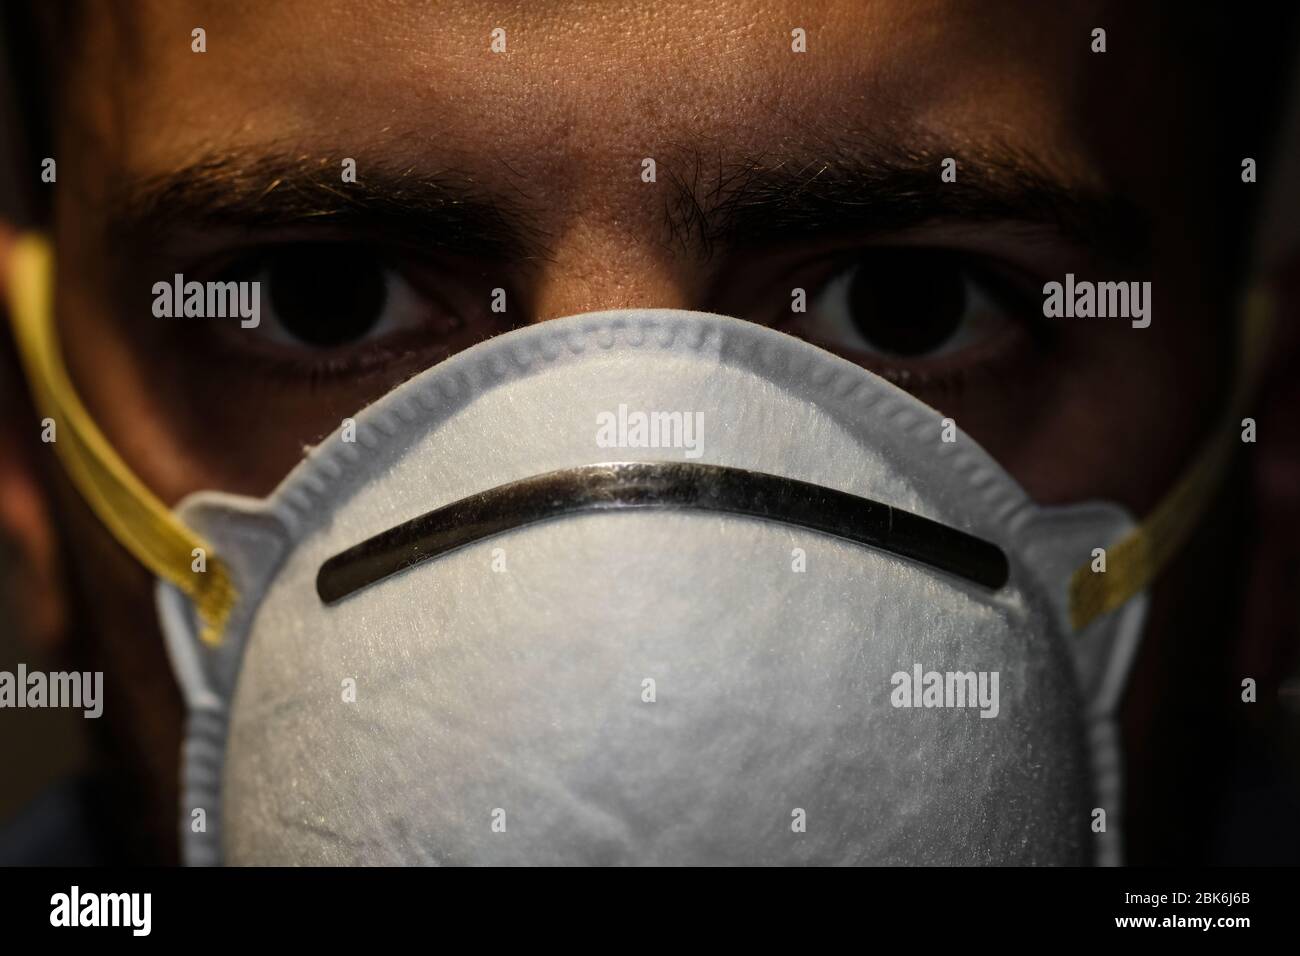 Guy Gesicht Nahaufnahme während Dressing Corona Virus Covid-19 Schutzmaske, Krankheit Stockfoto